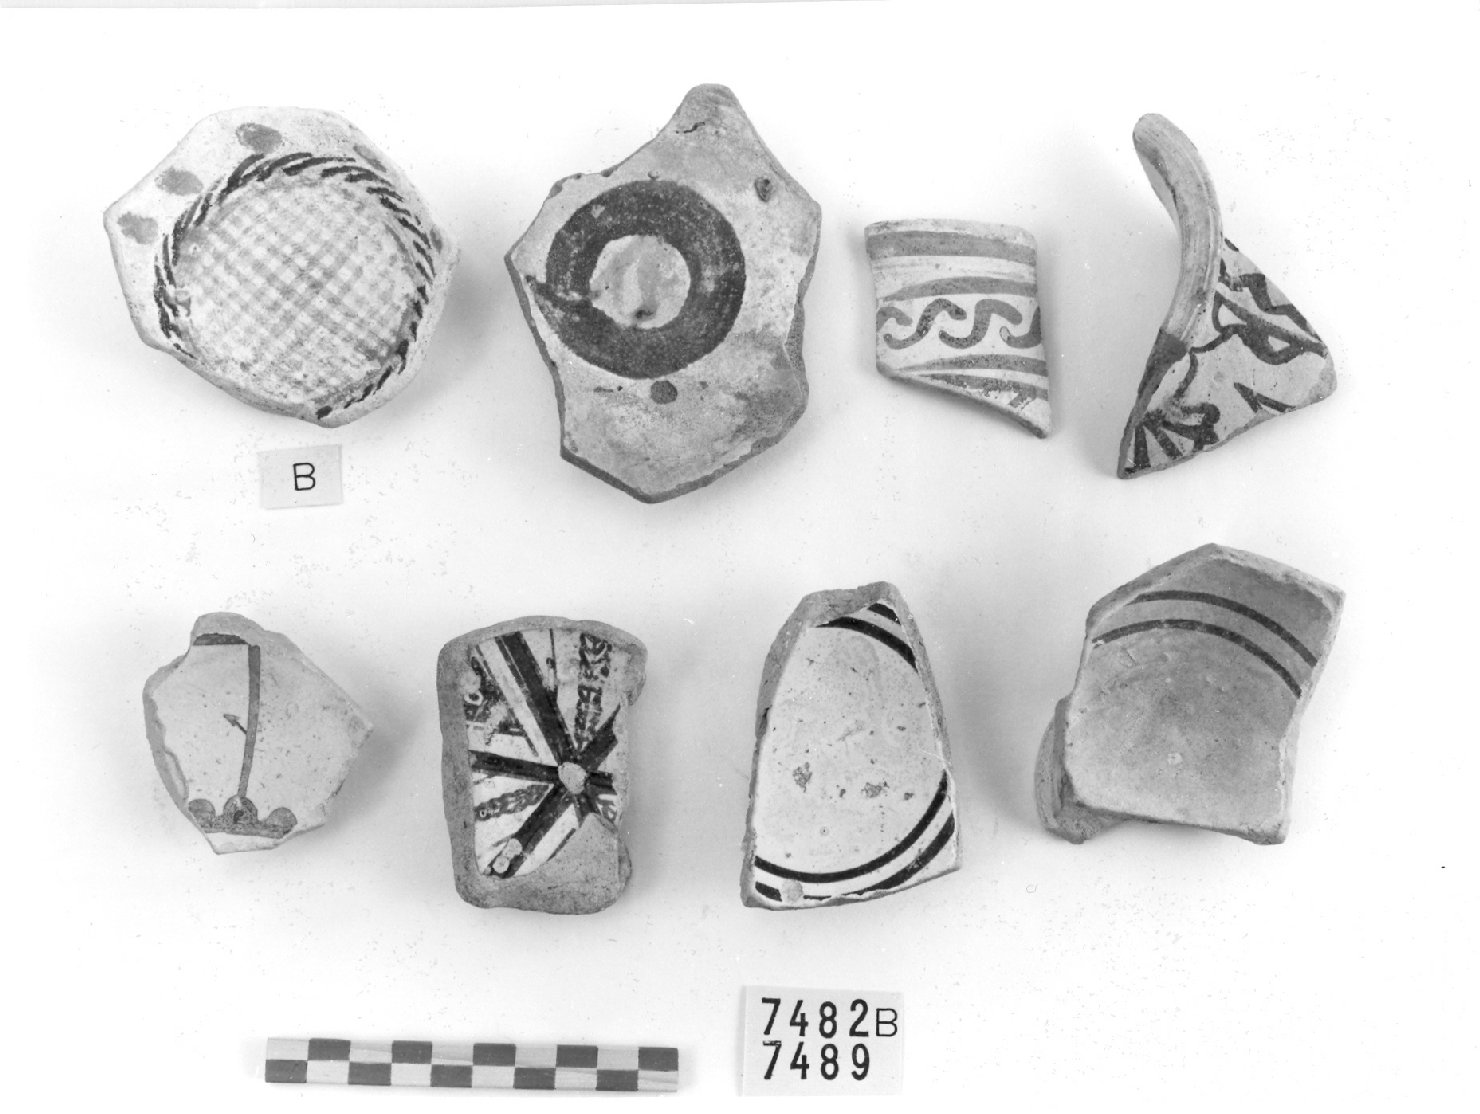 motivi decorativi a medaglioni (scodella, frammento) - bottega valenciana (secc. XIV/ XV)